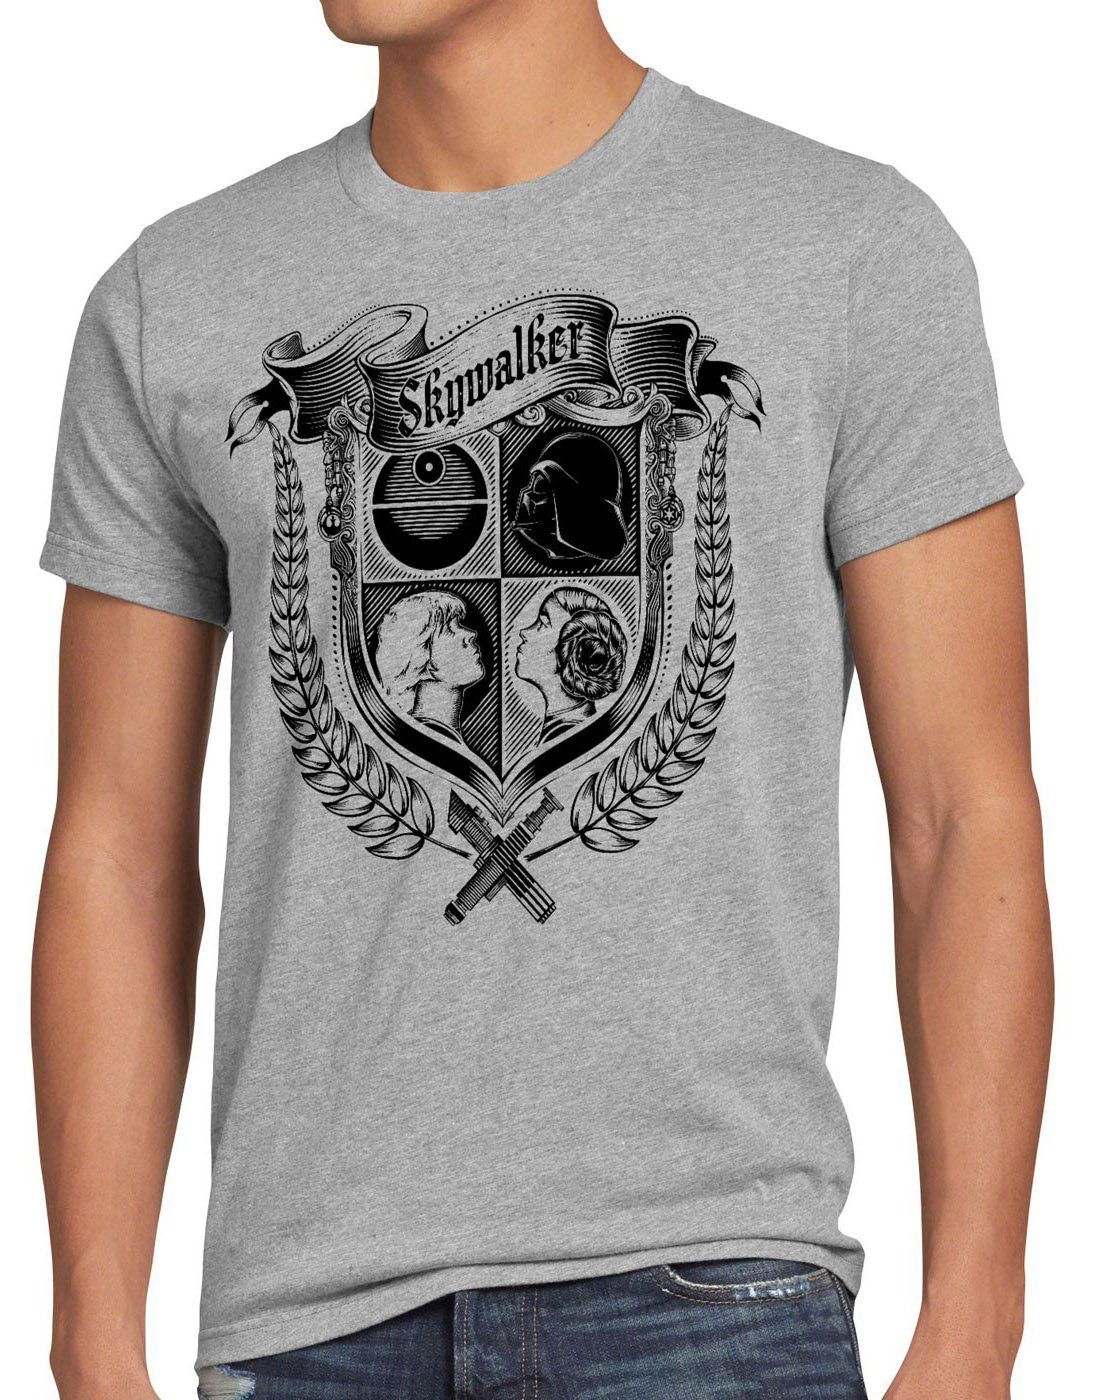 style3 Print-Shirt Herren T-Shirt Skywalker Wappen star krieg rebelliob yoda wars der sterne luke grau meliert